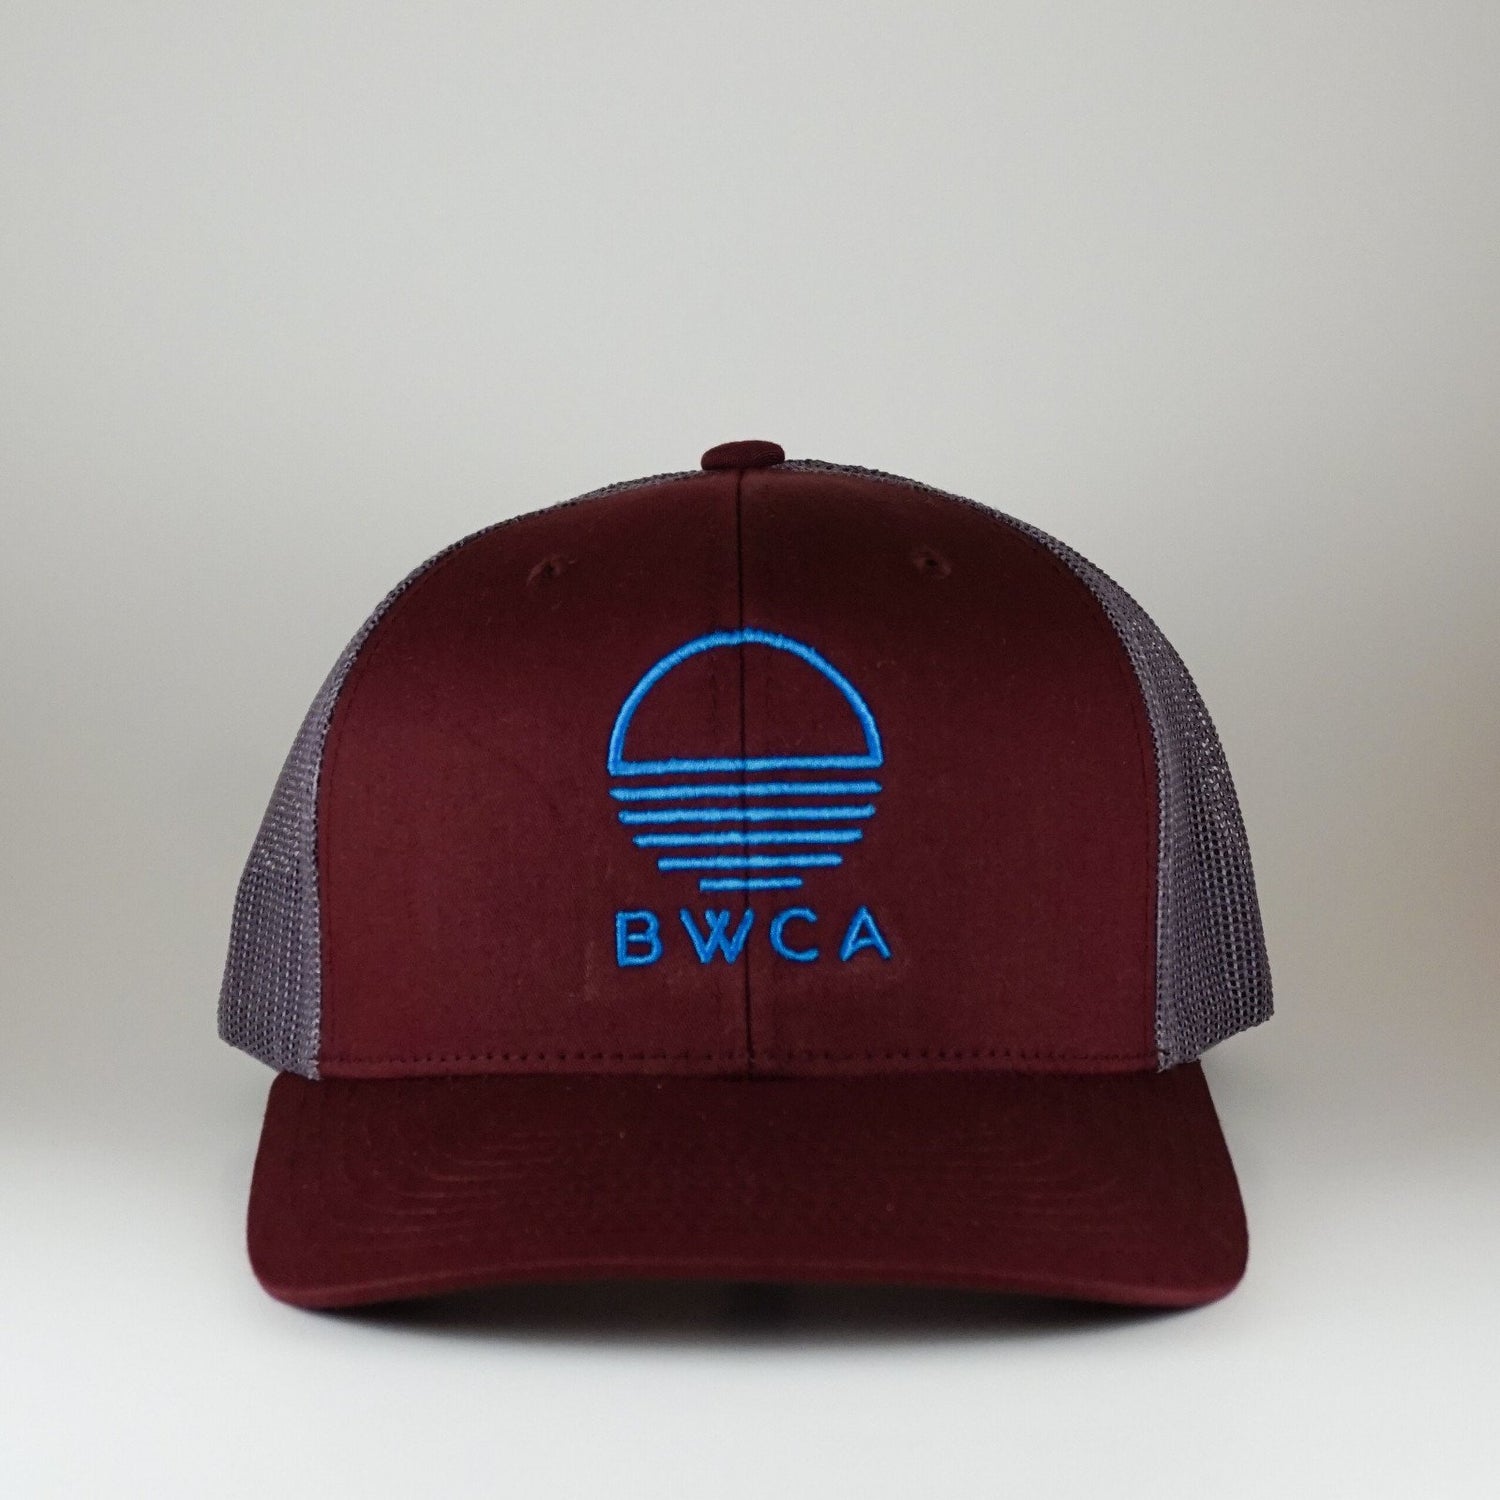 BWCA Sunset Cap - Burgundy - Humble Apparel Co 